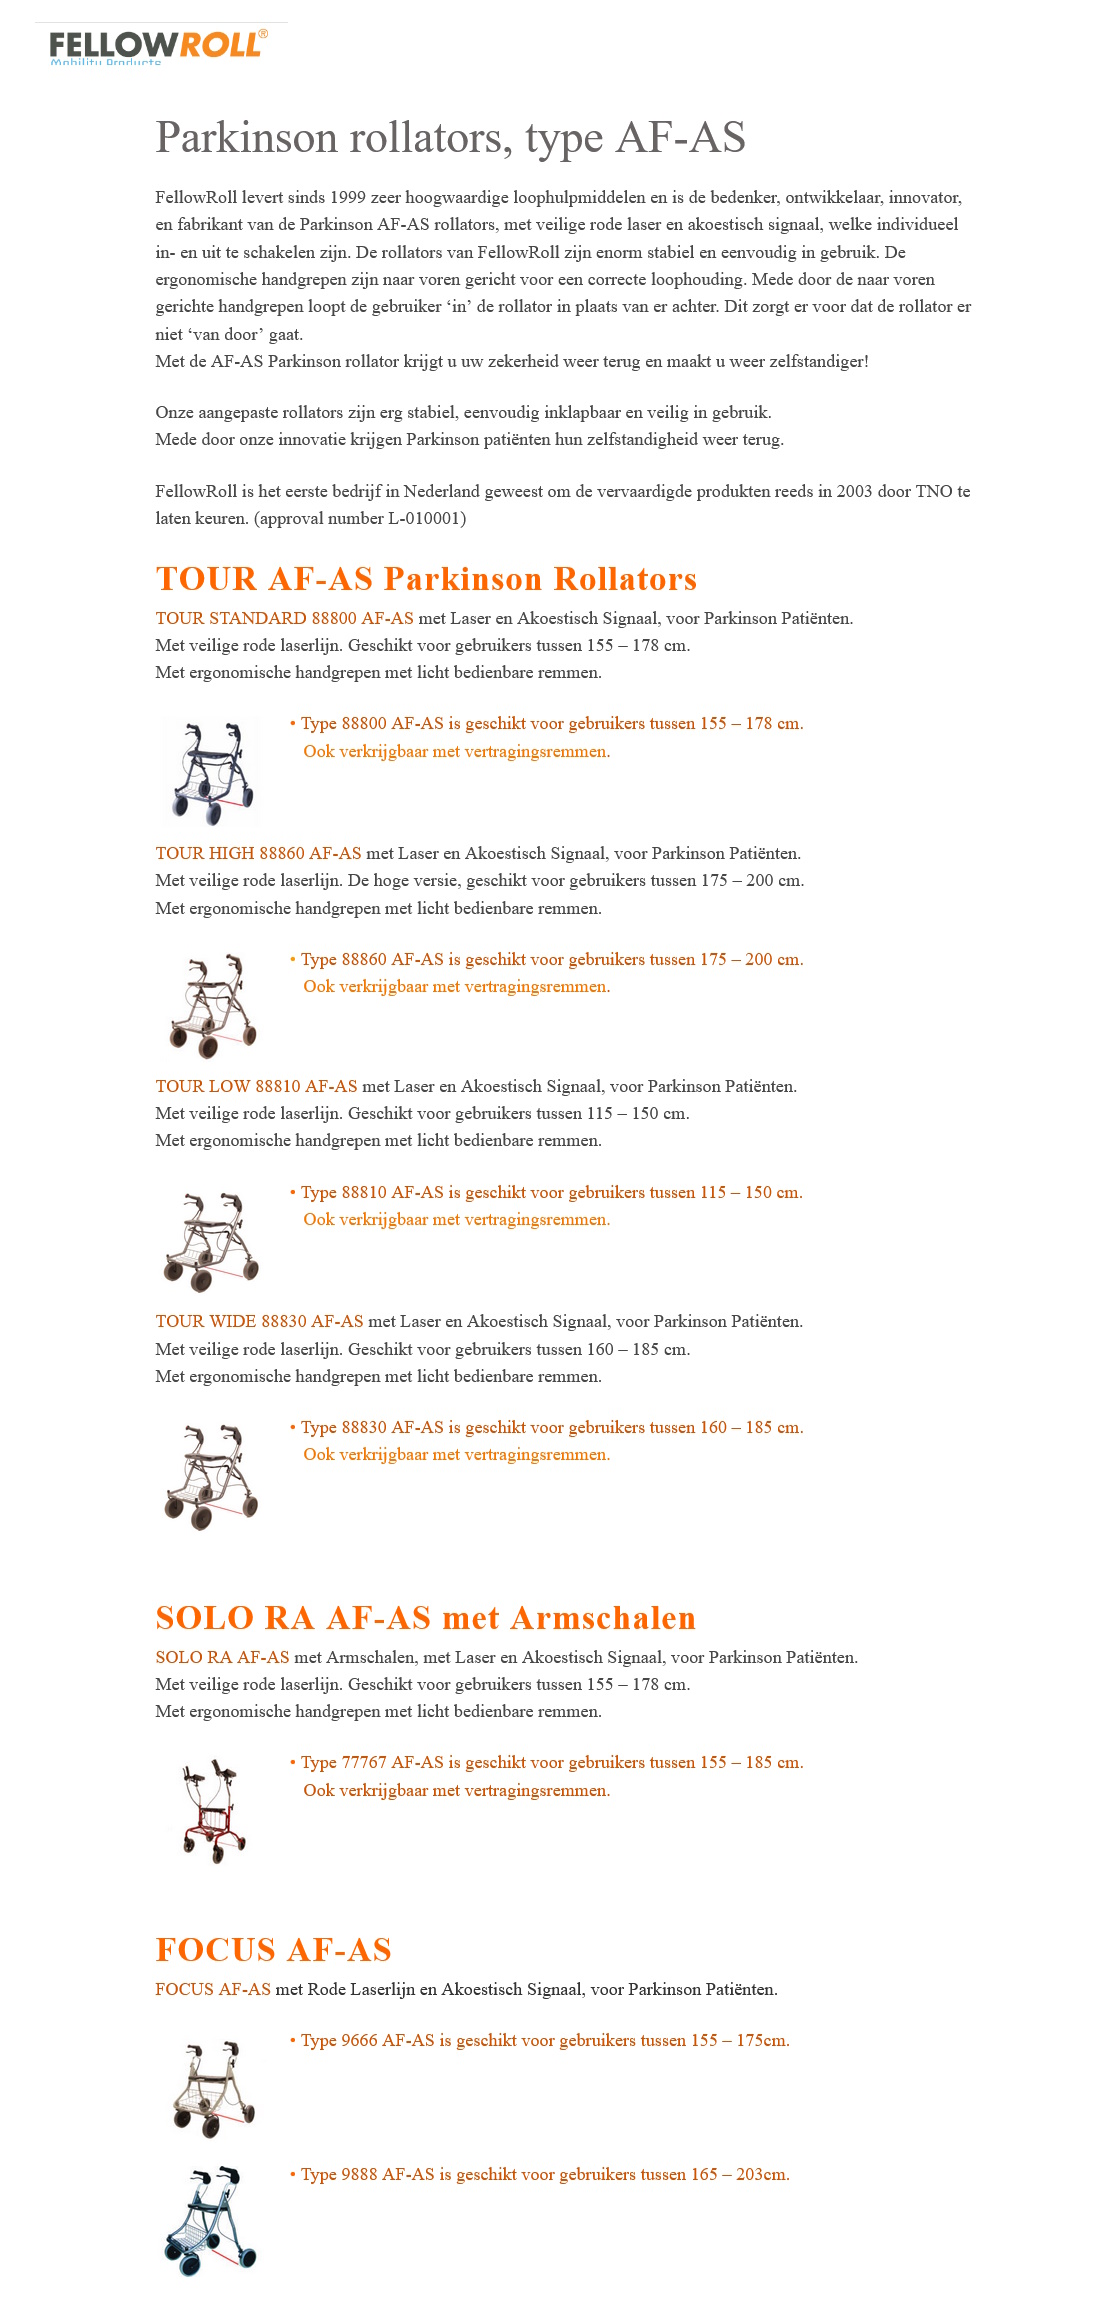 toegevoegd document 2 van Fellow-Roll Parkinson rollators, type AF-AS  